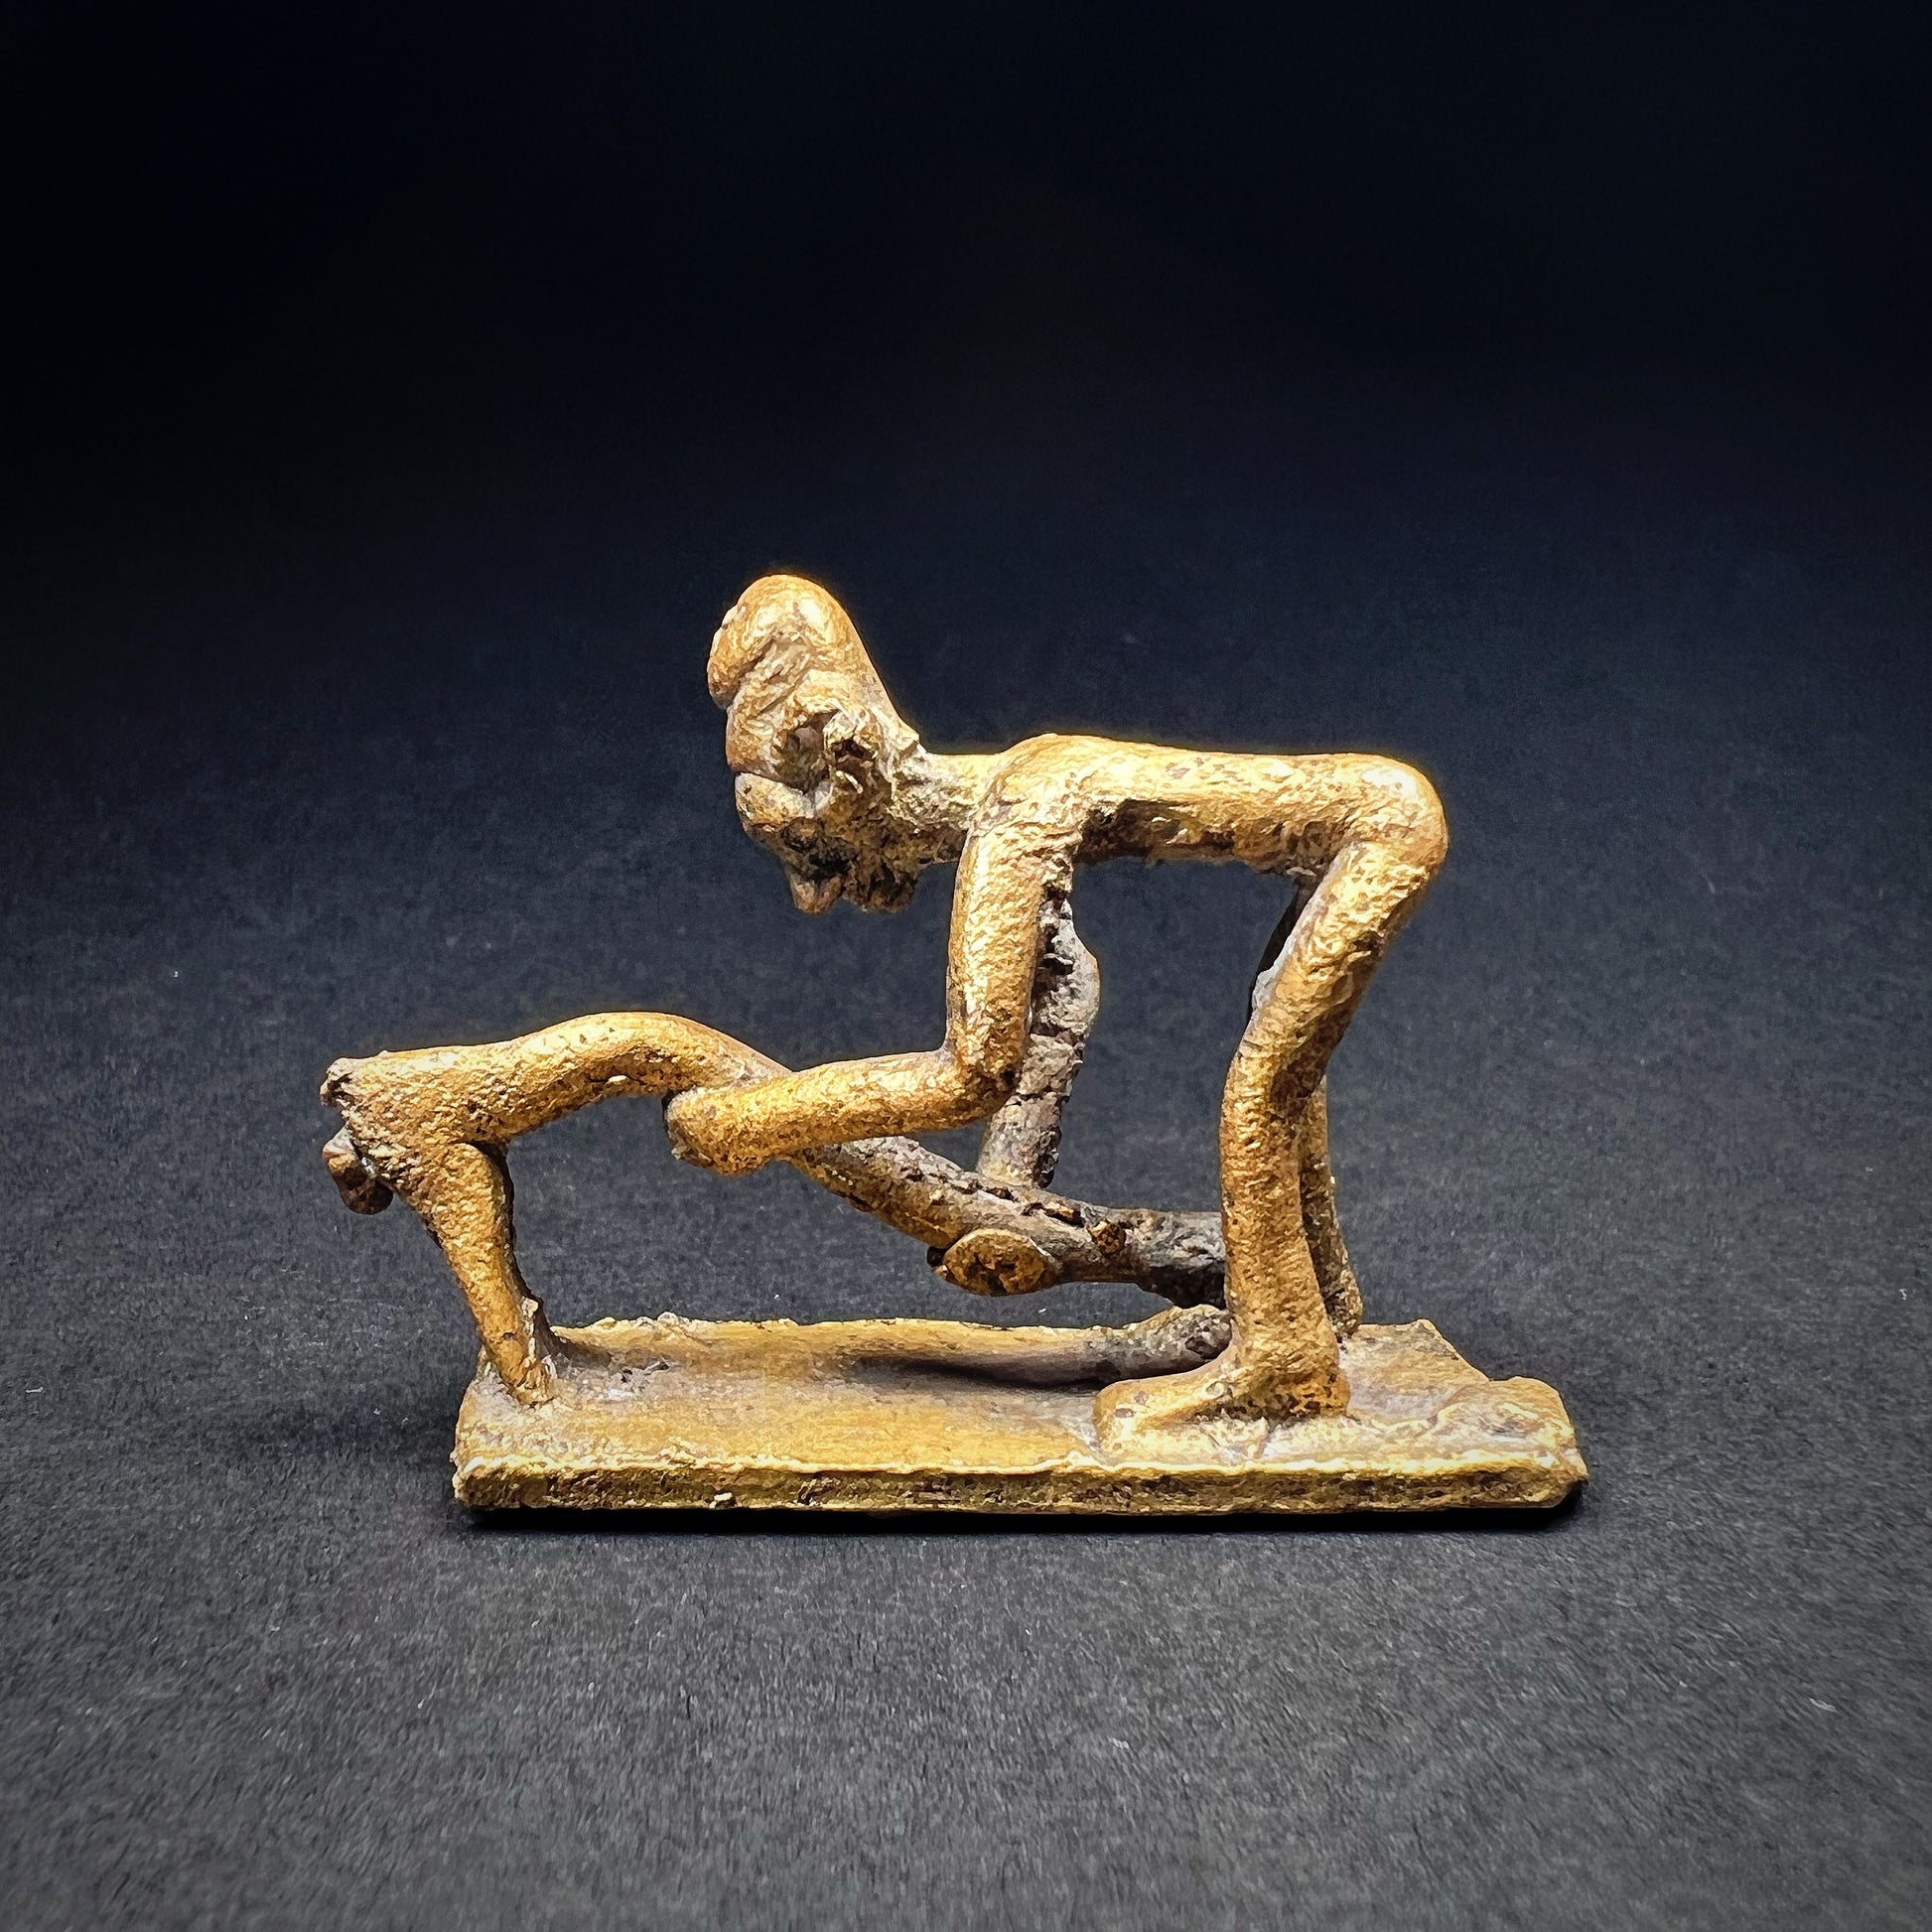 Asanti gold weight made out of bronze. A farmer figure.